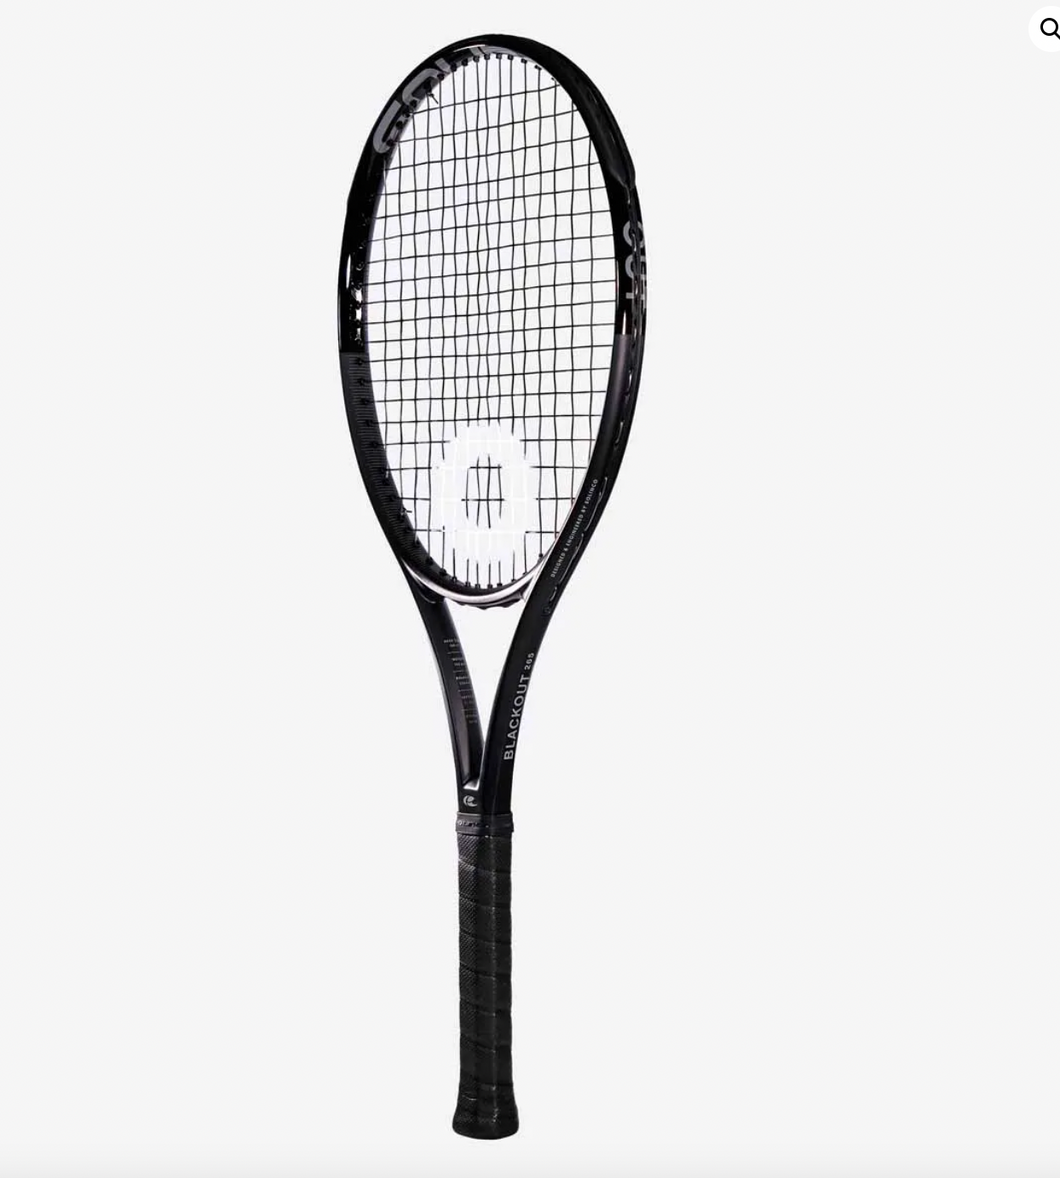 Solinco Blackout 265 Tennis Racquet - I LOVE MY DOUBLES PARTNER!!!